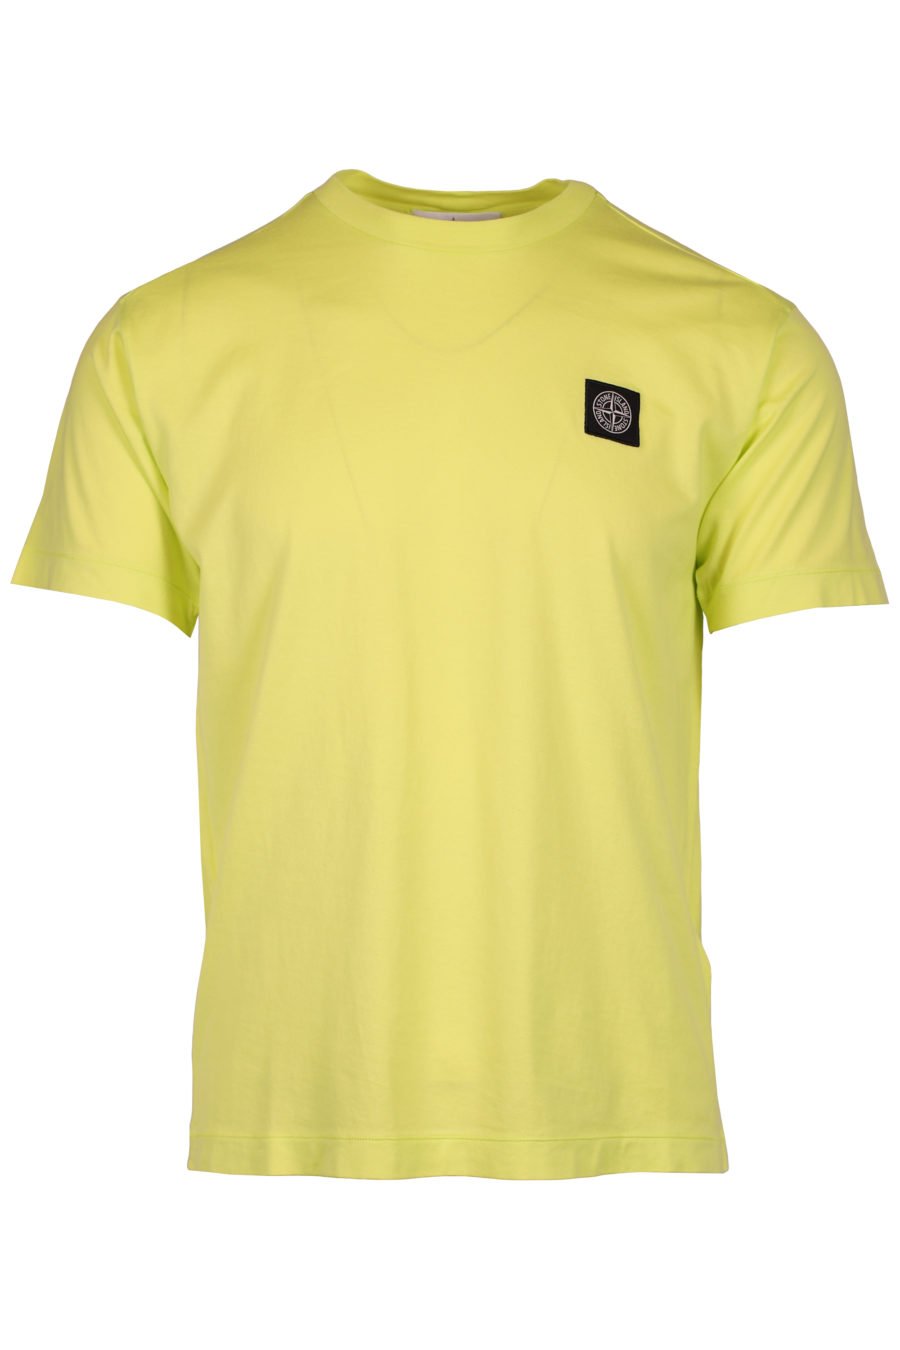 Camiseta de color lima neón con parche - IMG 2533